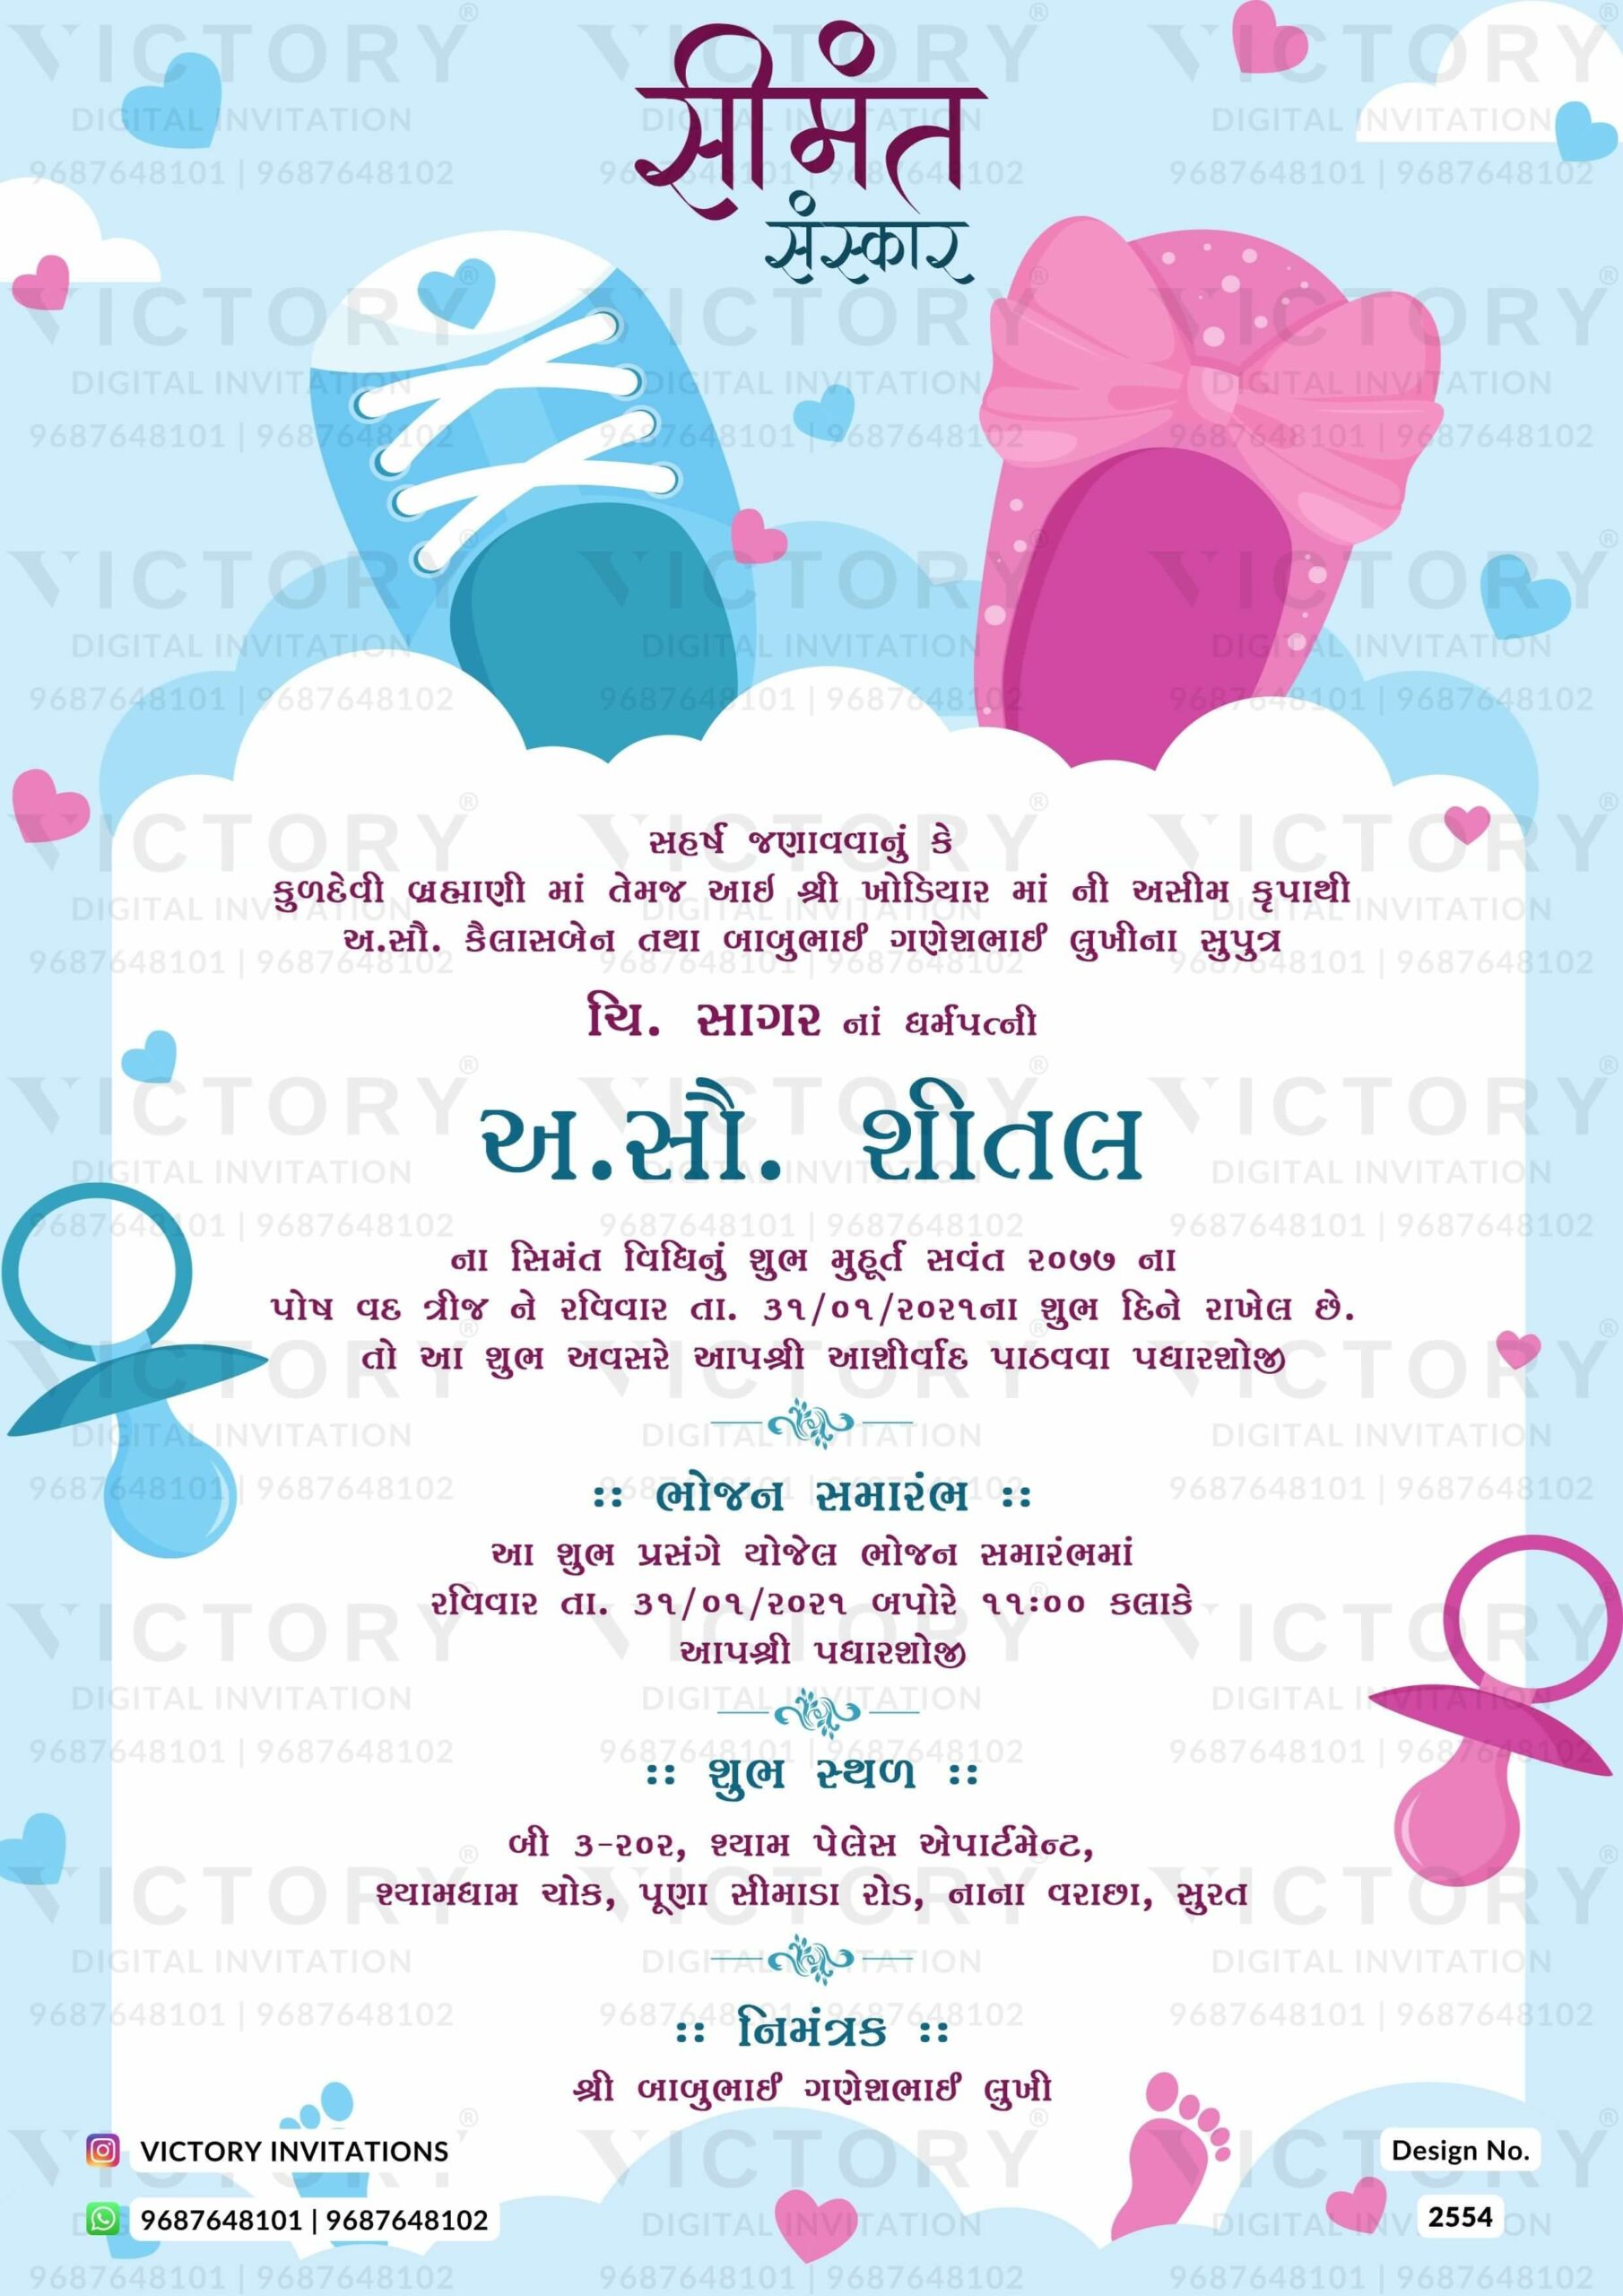 Toy theme Simant Vidhi baby shower digital invitation card in Gujarati language, design 2554